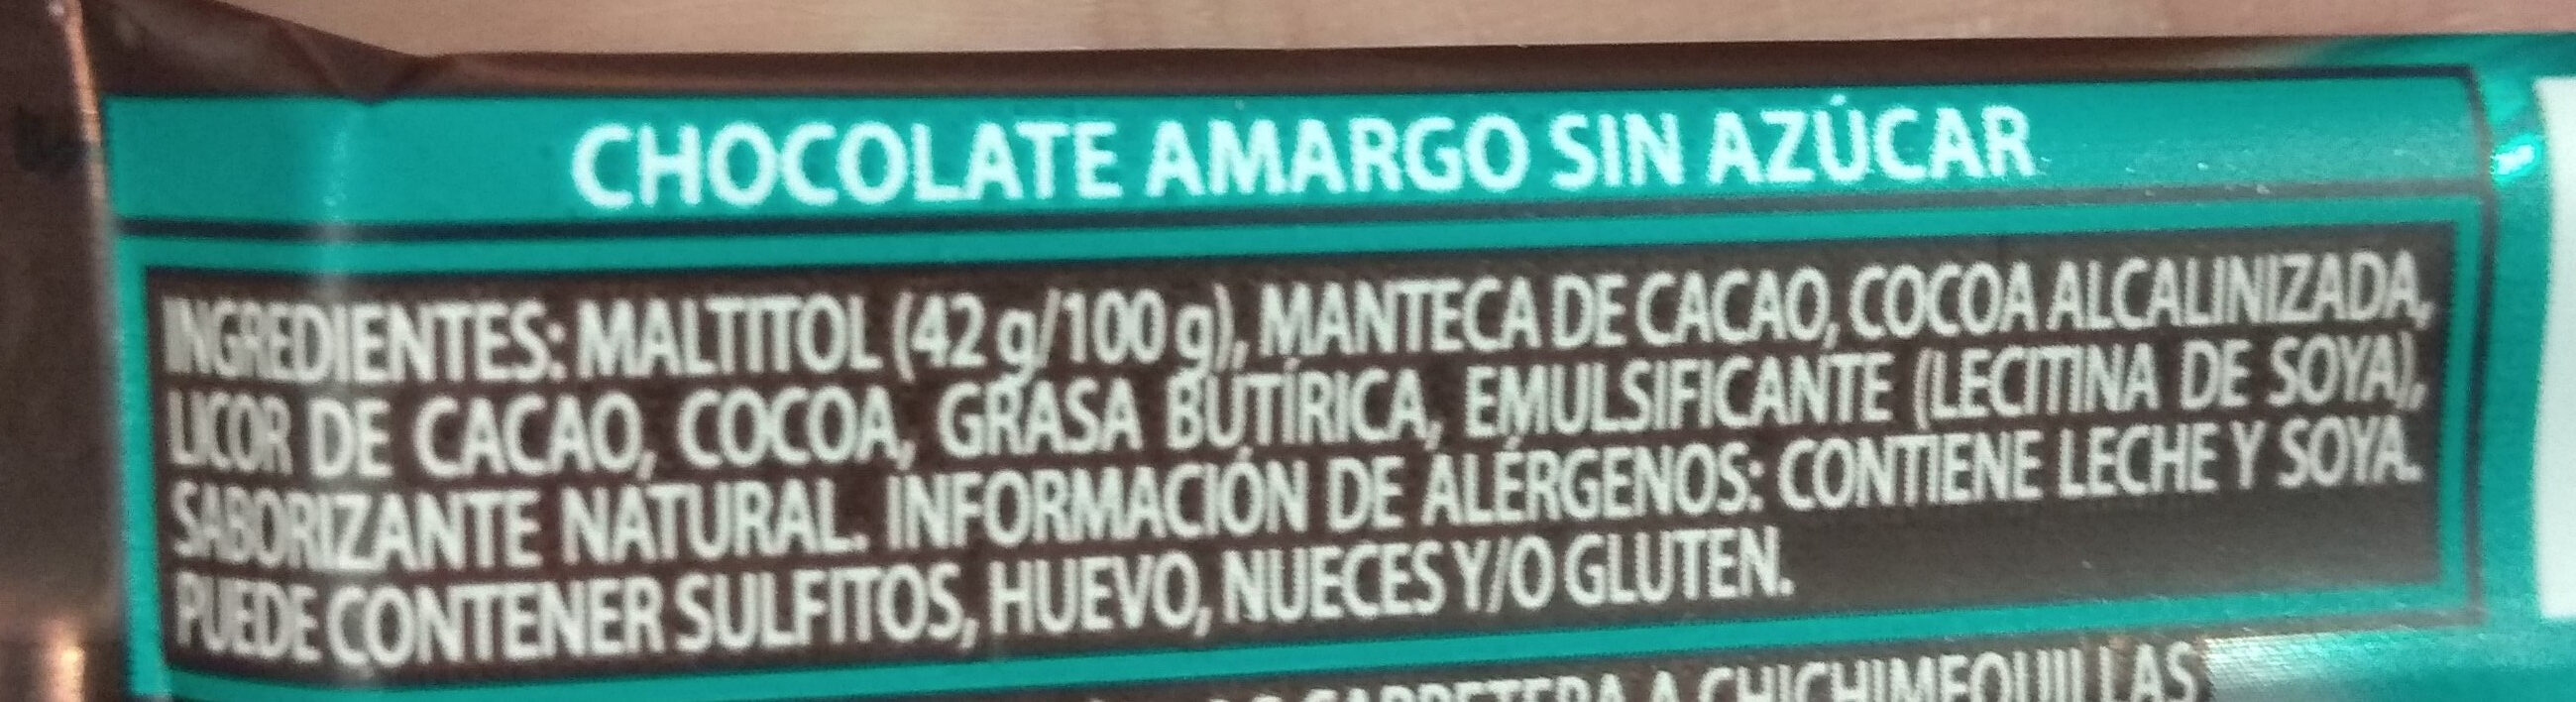 Chocolate Amargo sin azúcar 55% - Ingredientes